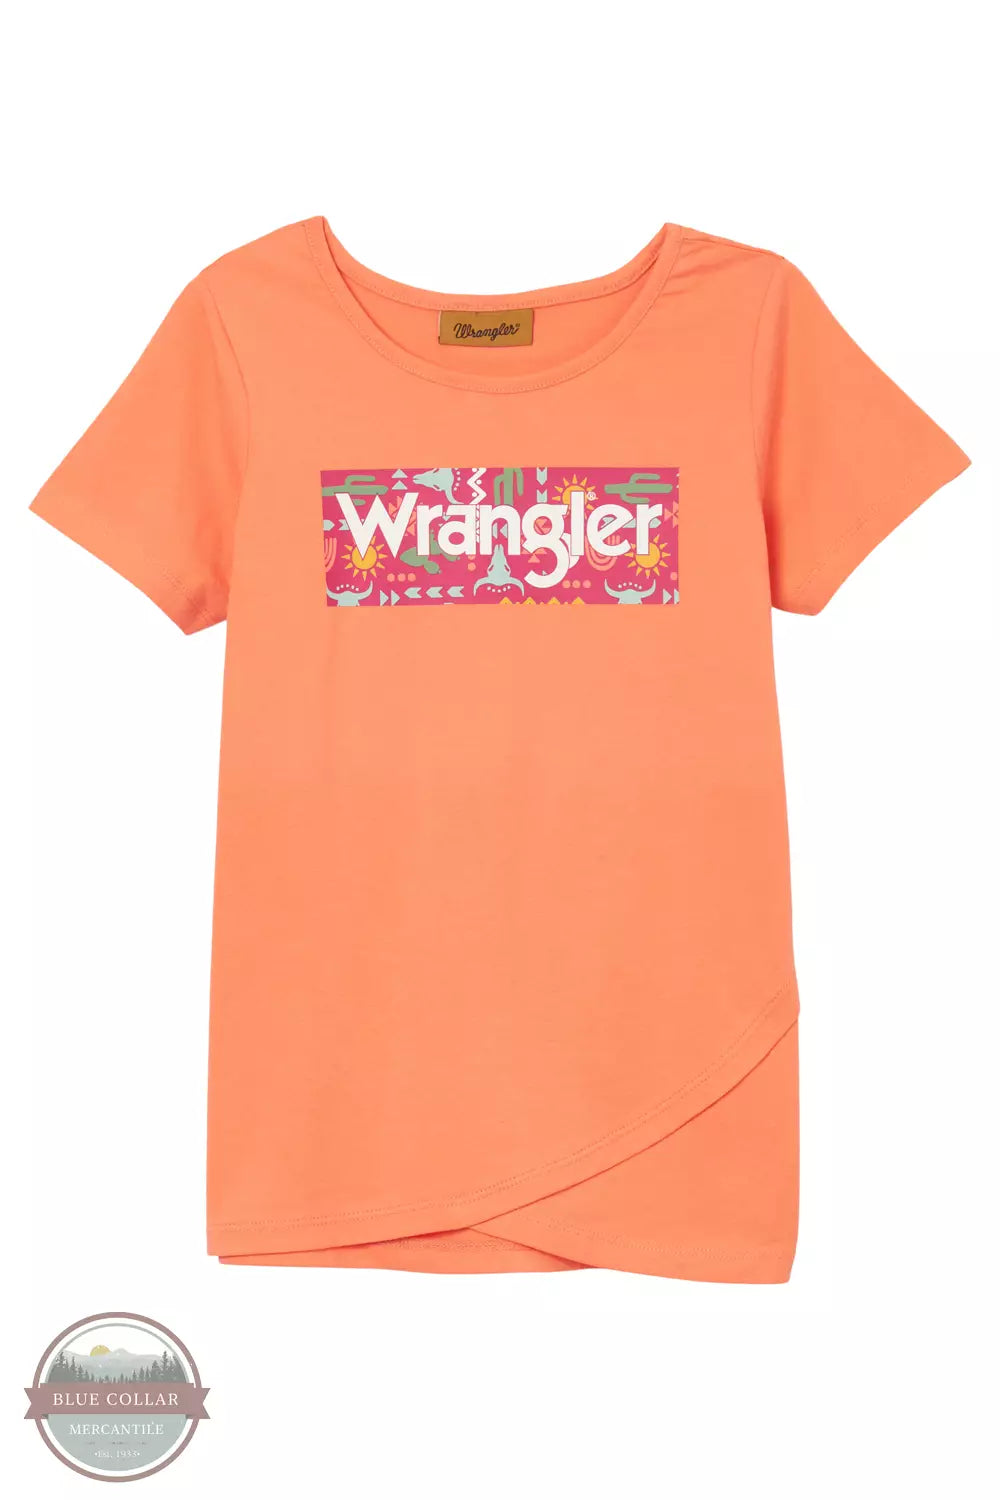 Wrangler 112344178 Logo Short Sleeve T-Shirt with Tulip Hem in Orange Front View